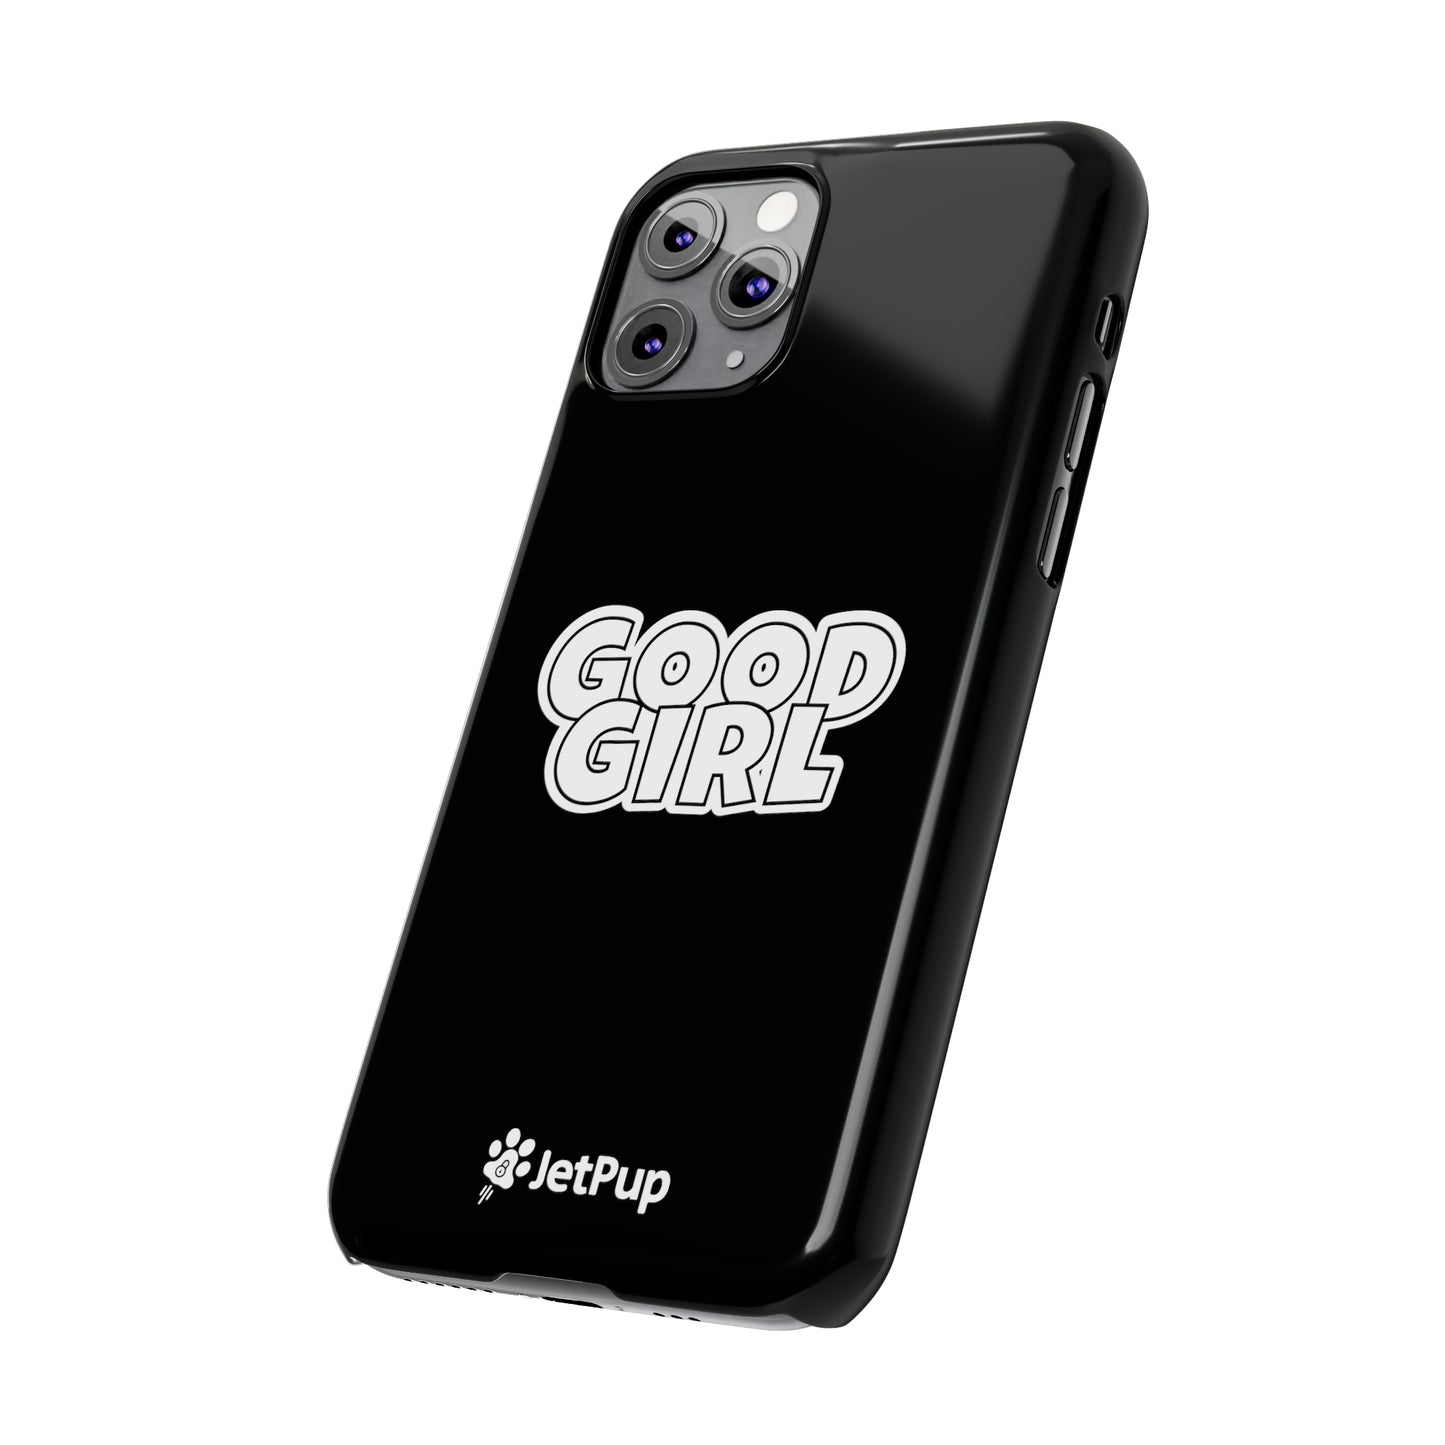 Good Girl Slim iPhone Cases - Black